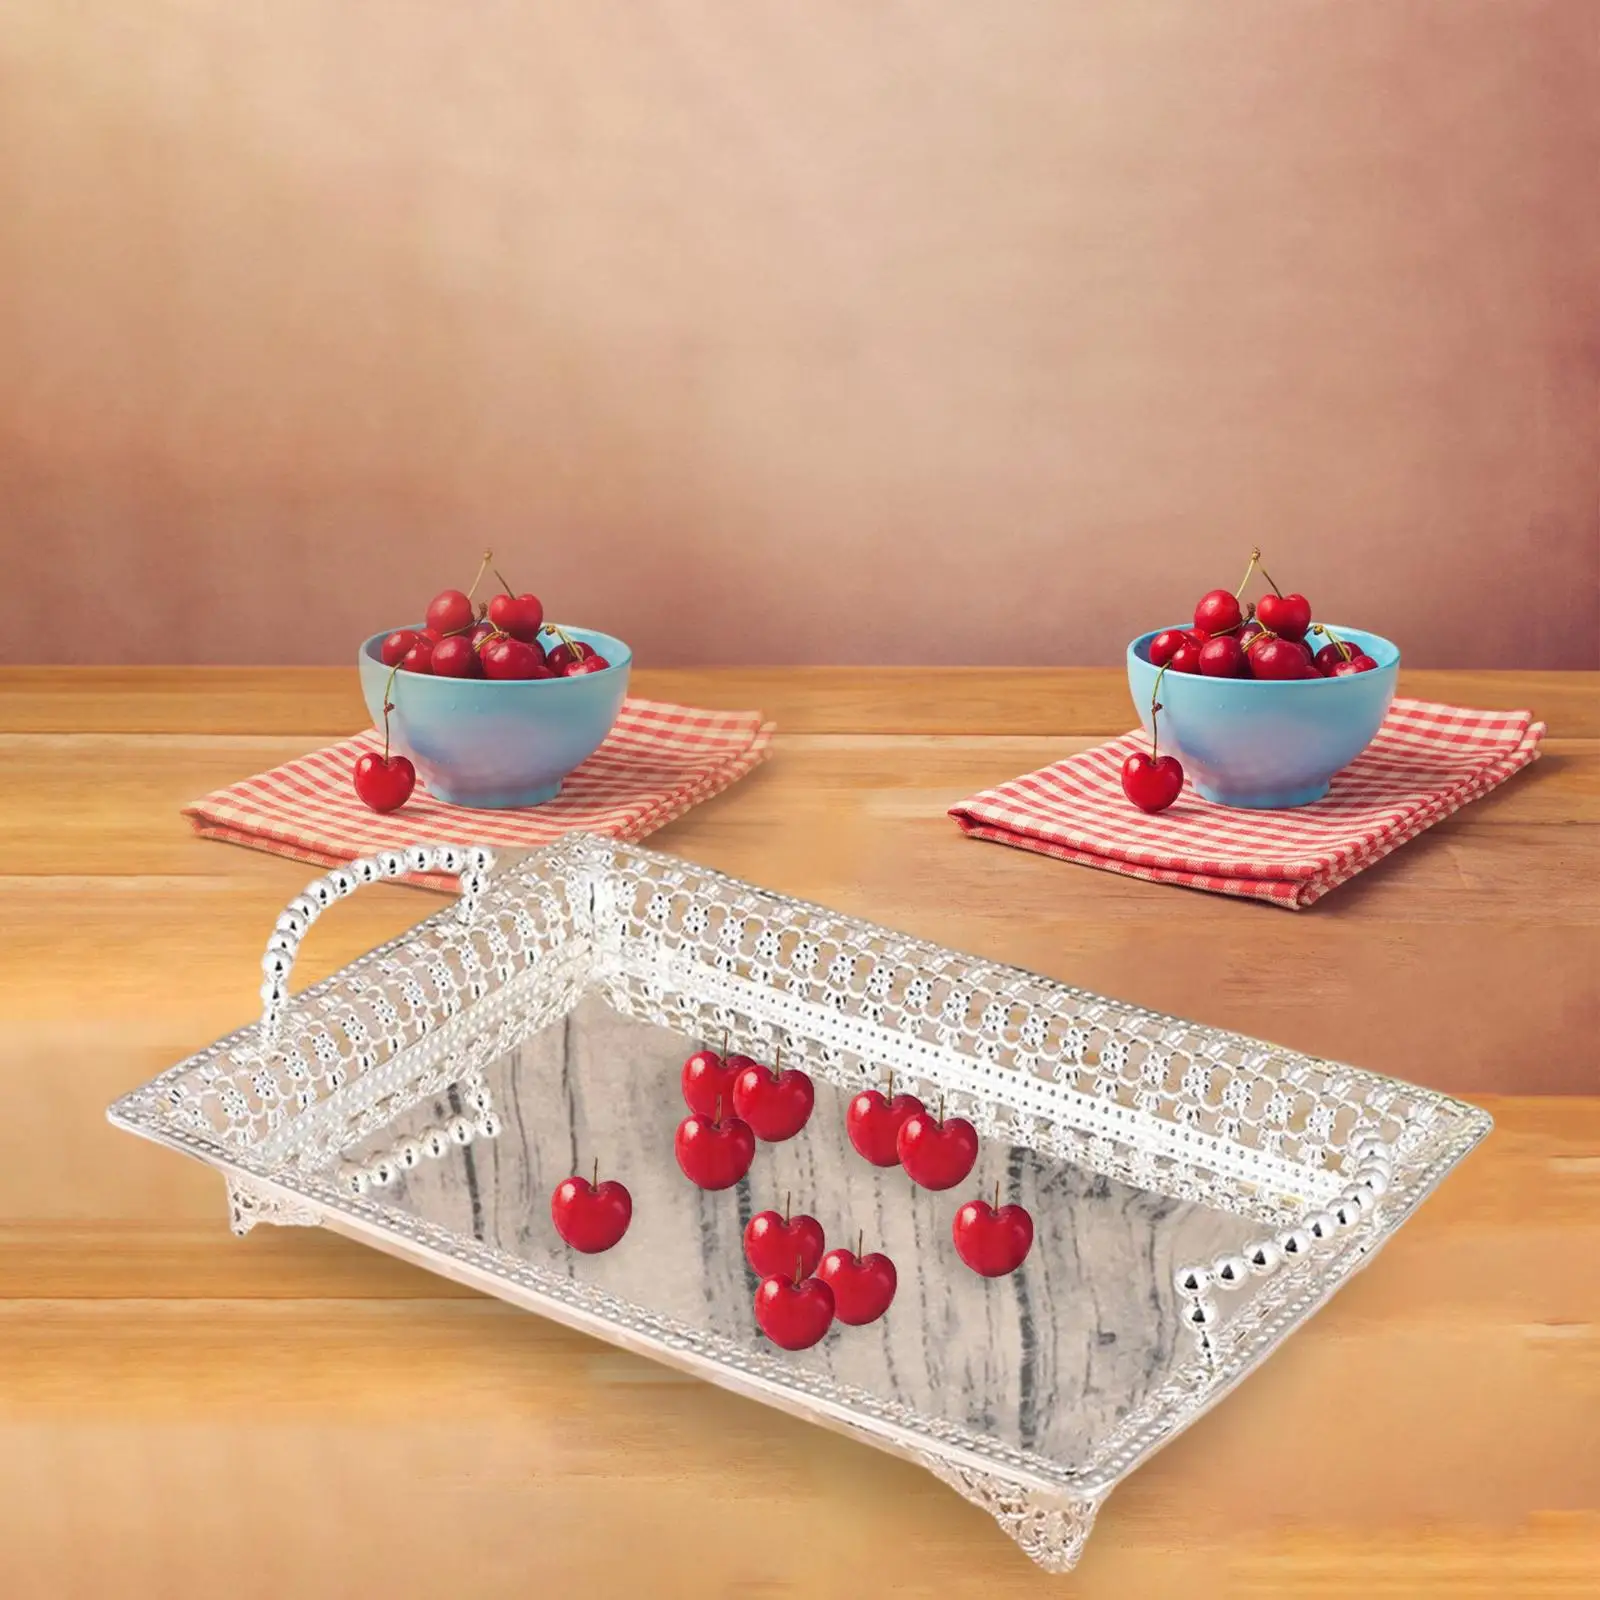 Decorative Serving Tray Appetizer Serving Dishes Party Serving Trays Wedding Decorative Trays for Restaurant Birthday Countertop